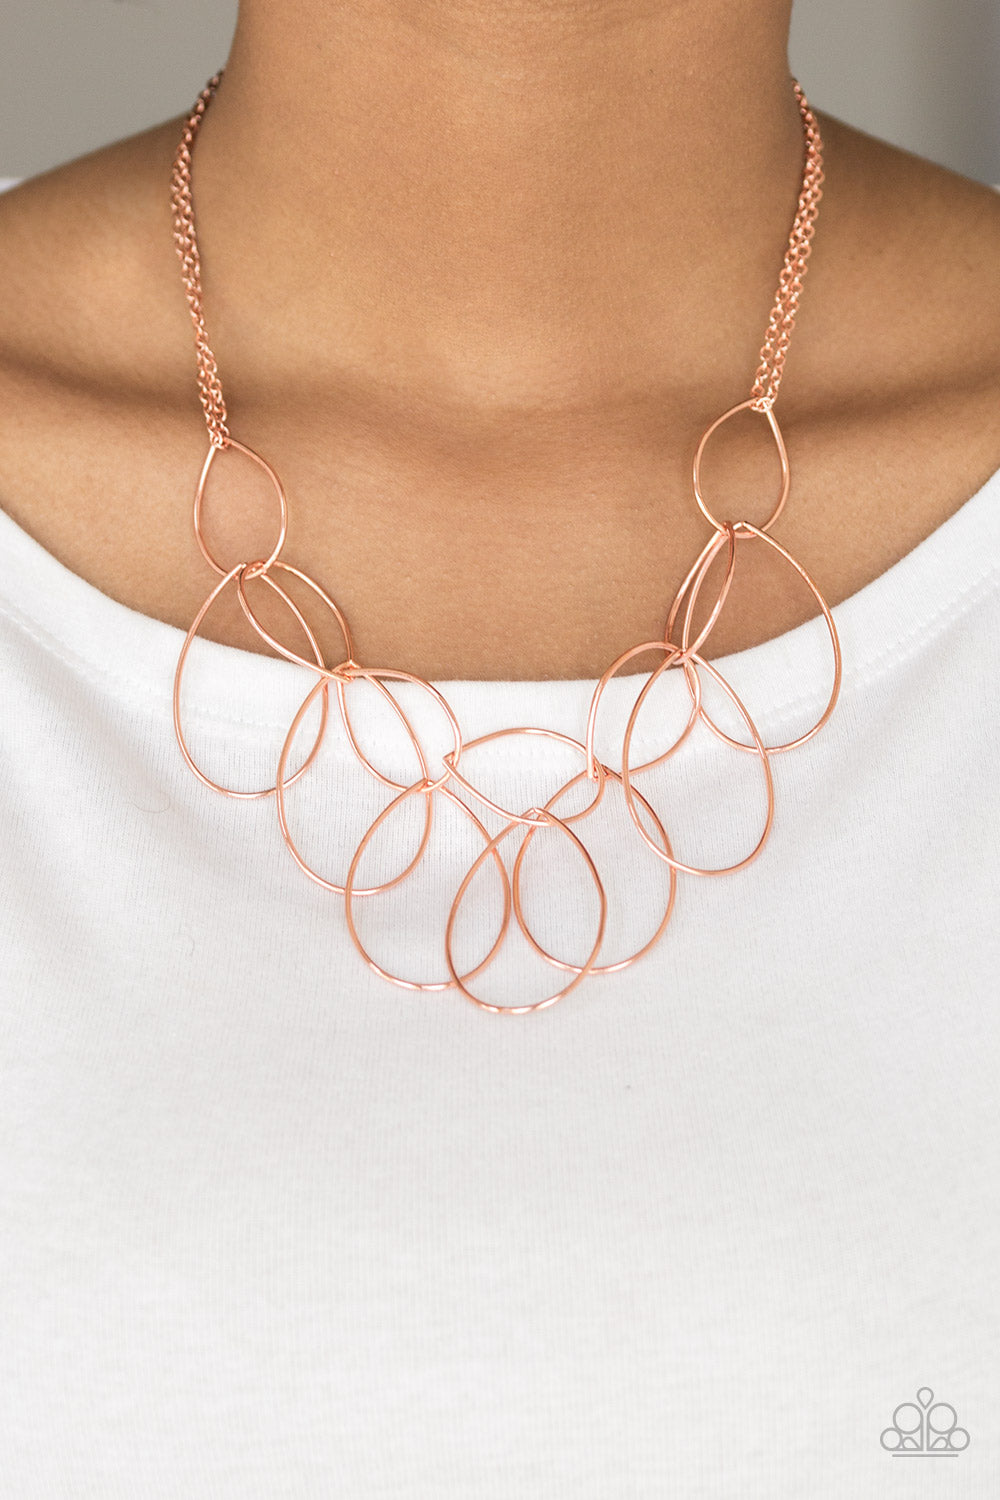 Top - TEAR Fashion - Copper Necklace 1107N